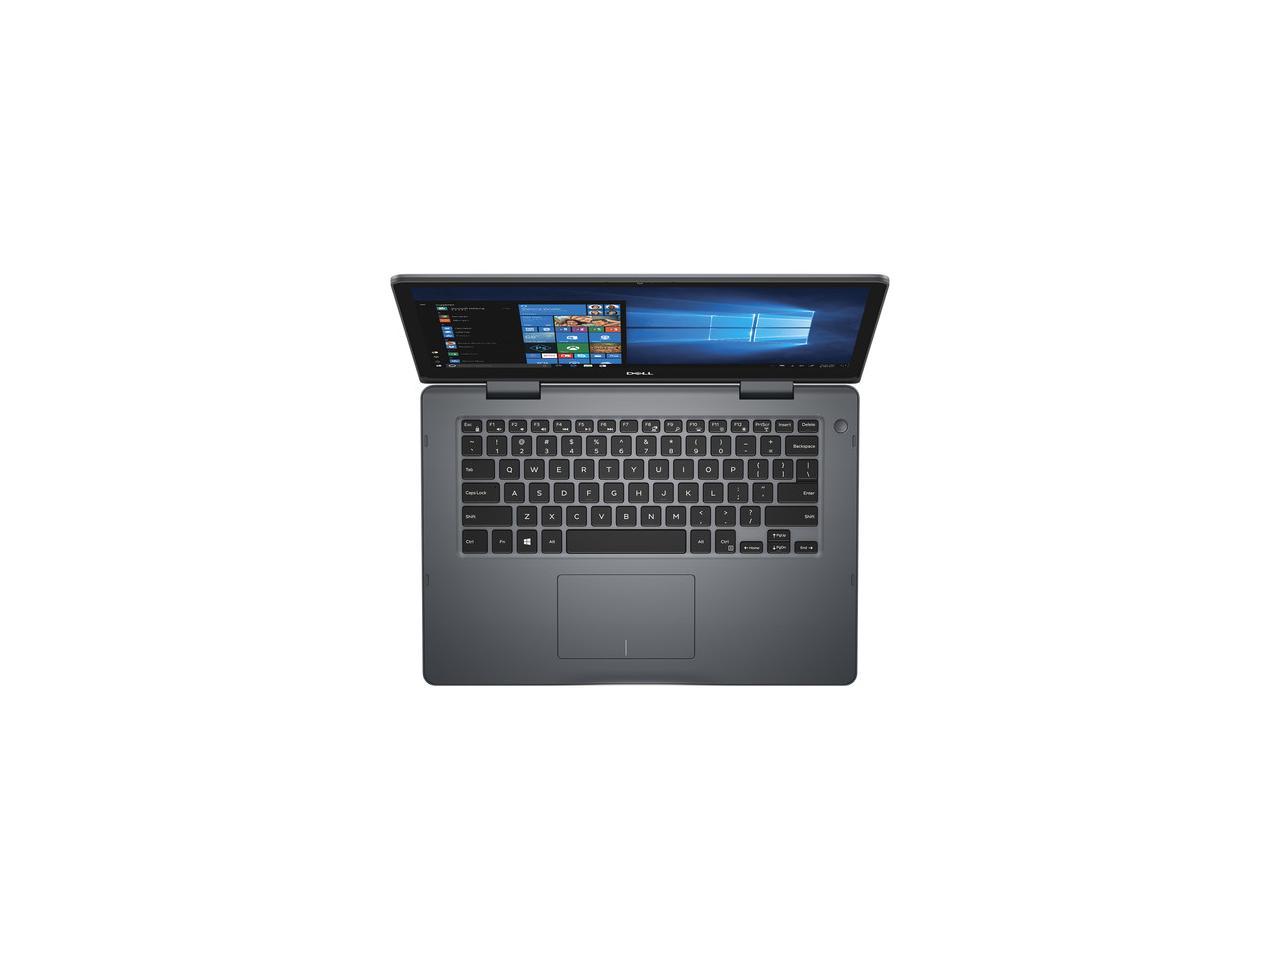 Dell Inspiron 14 5000 5481 14" Touchscreen 2 in 1 Notebook - 1366 x 768 - Core i5 i5-8265U - 8 GB RAM - 256 GB SSD - Windows 10 Home in S mode 64-bit - Intel UHD Graphics 620 - Twisted nematic (T